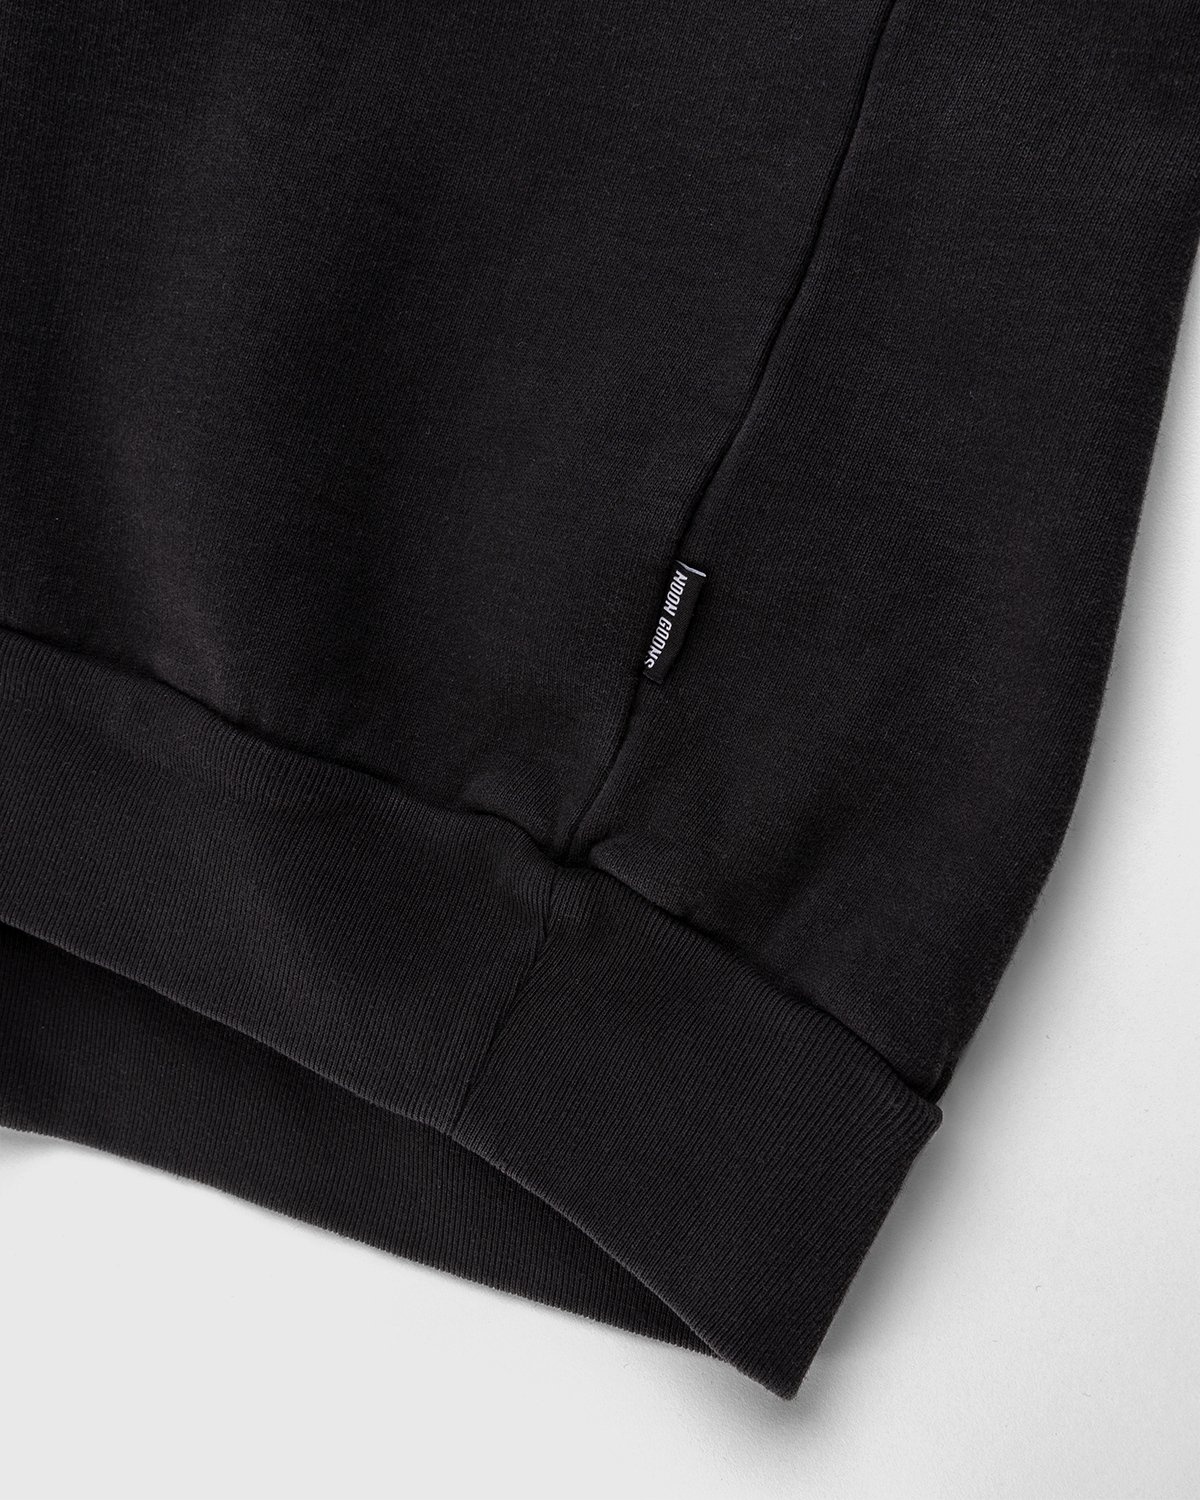 Noon Goons – Garden Sweatshirt Black - Sweatshirts - Black - Image 4